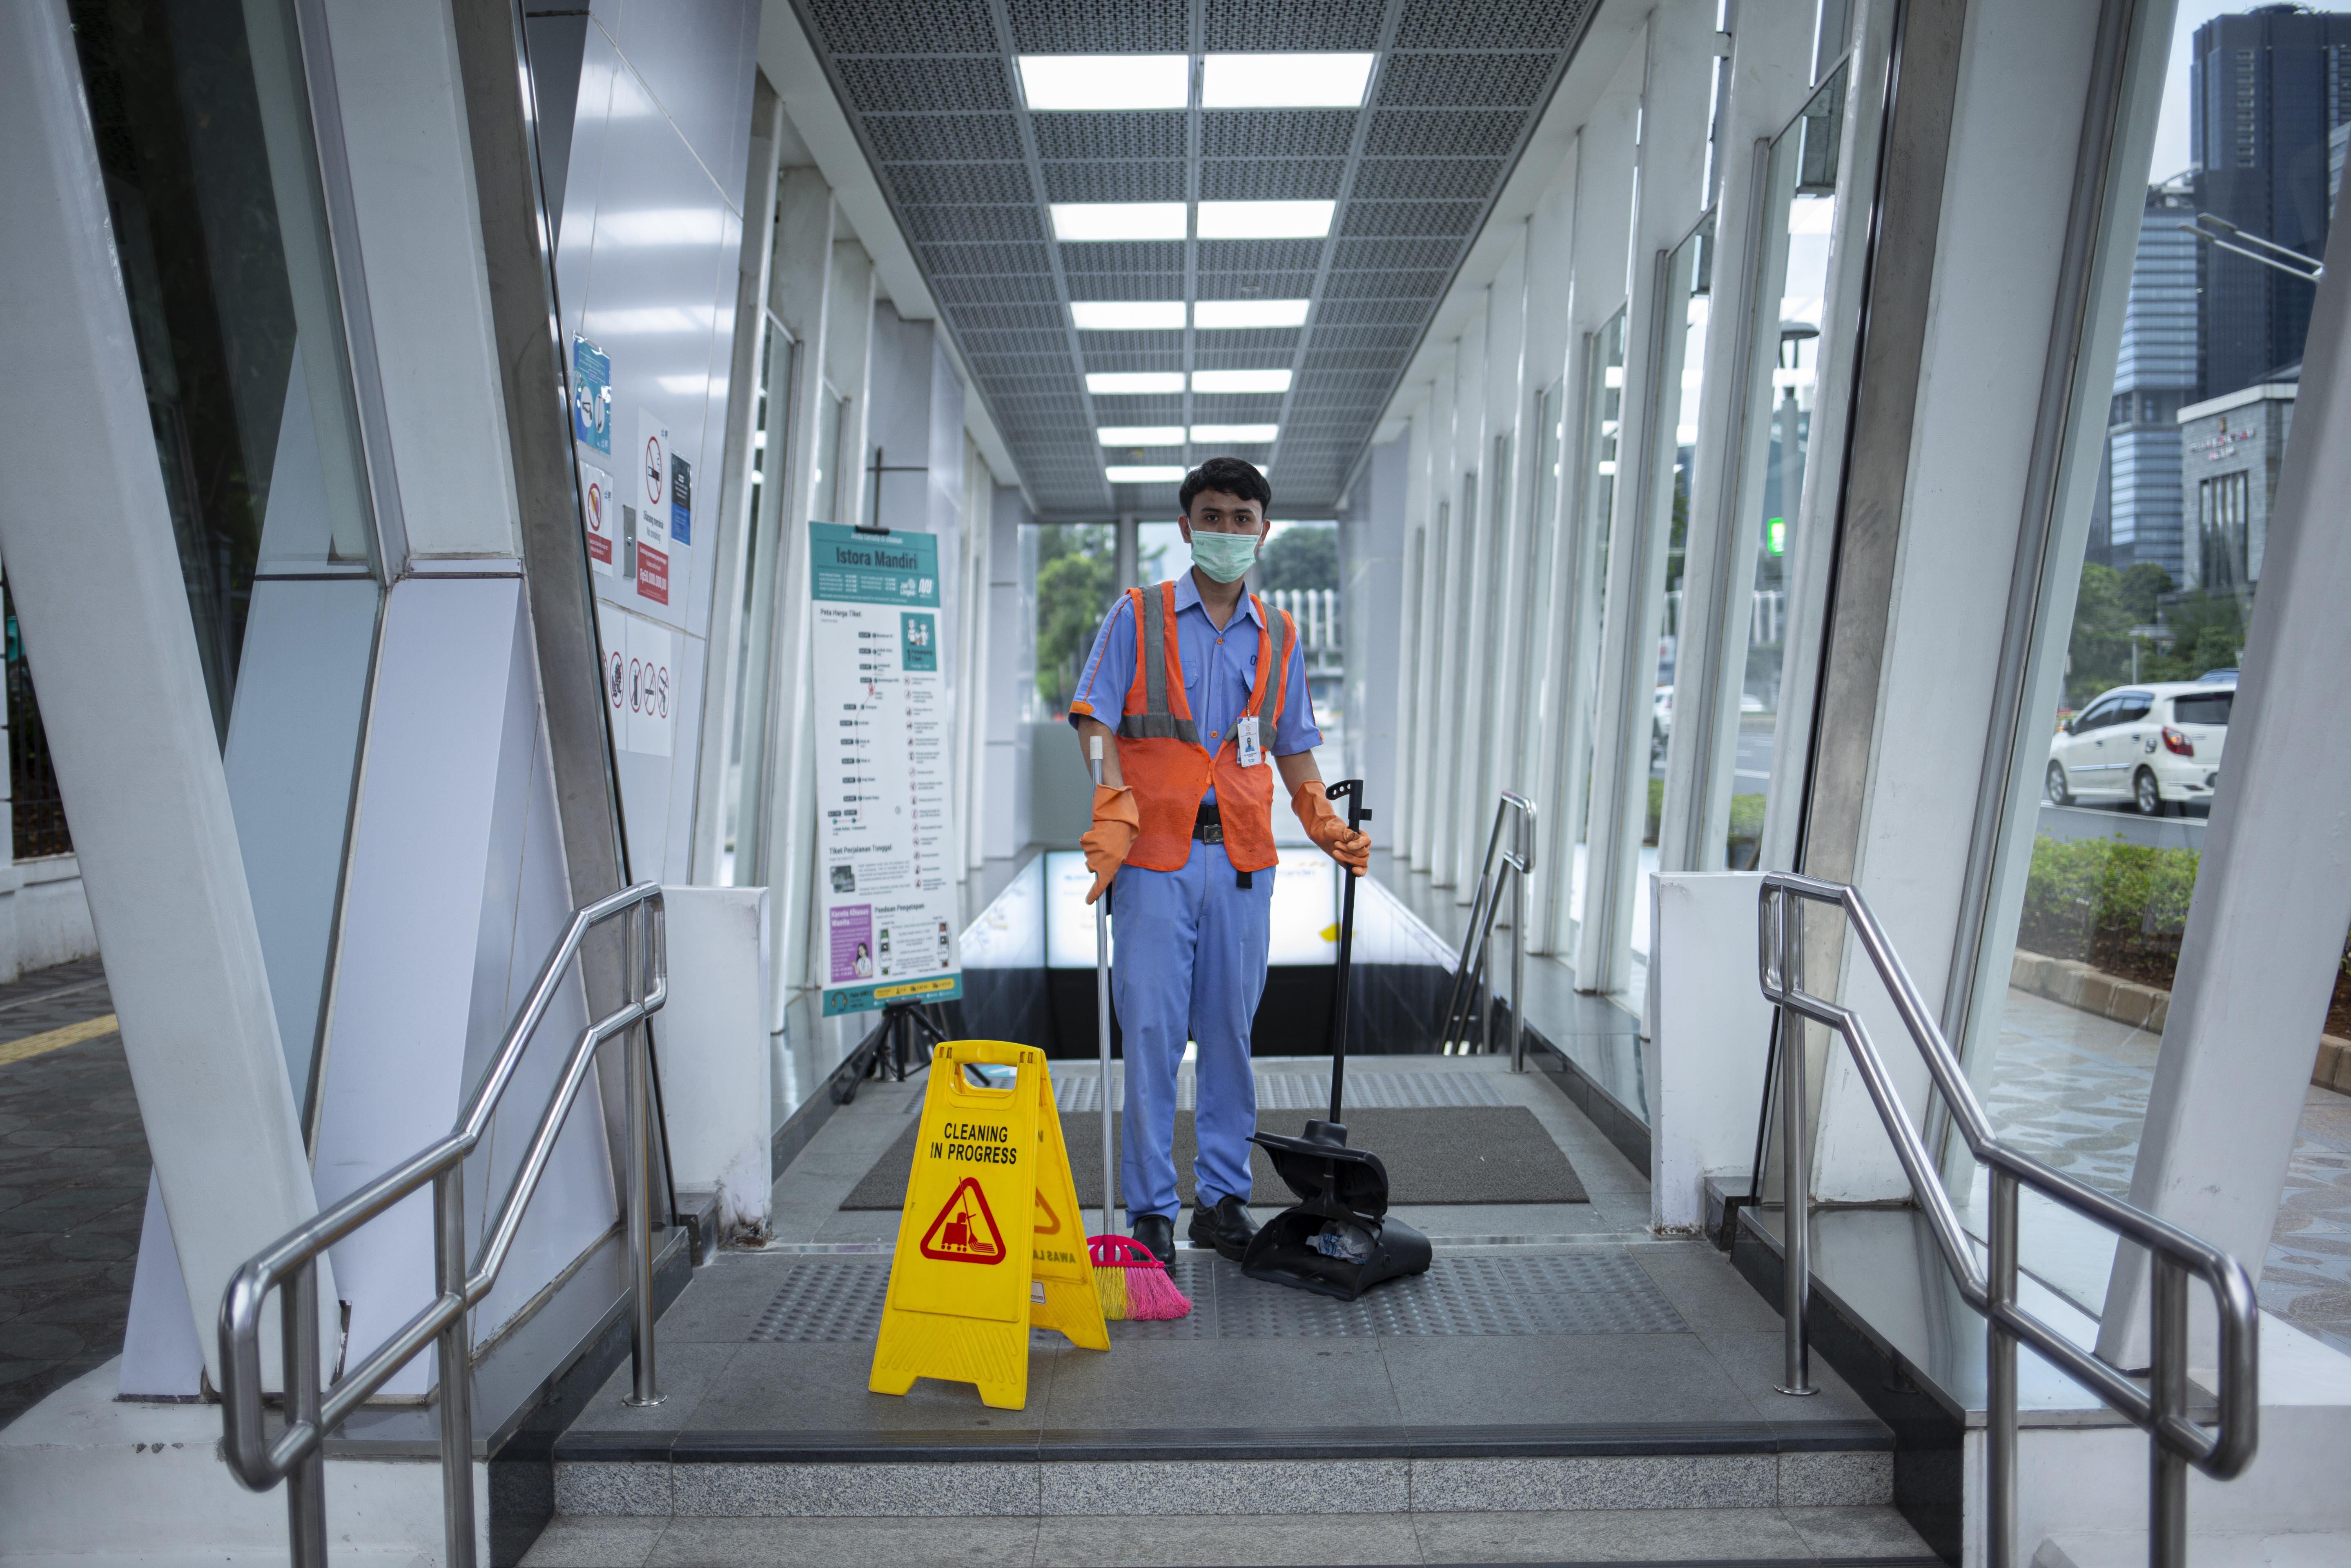 Renaldi (20), merupakan petugas kebersihan Stasiun MRT yang harus tetap menjaga kebersiahan ditengah pendemi.